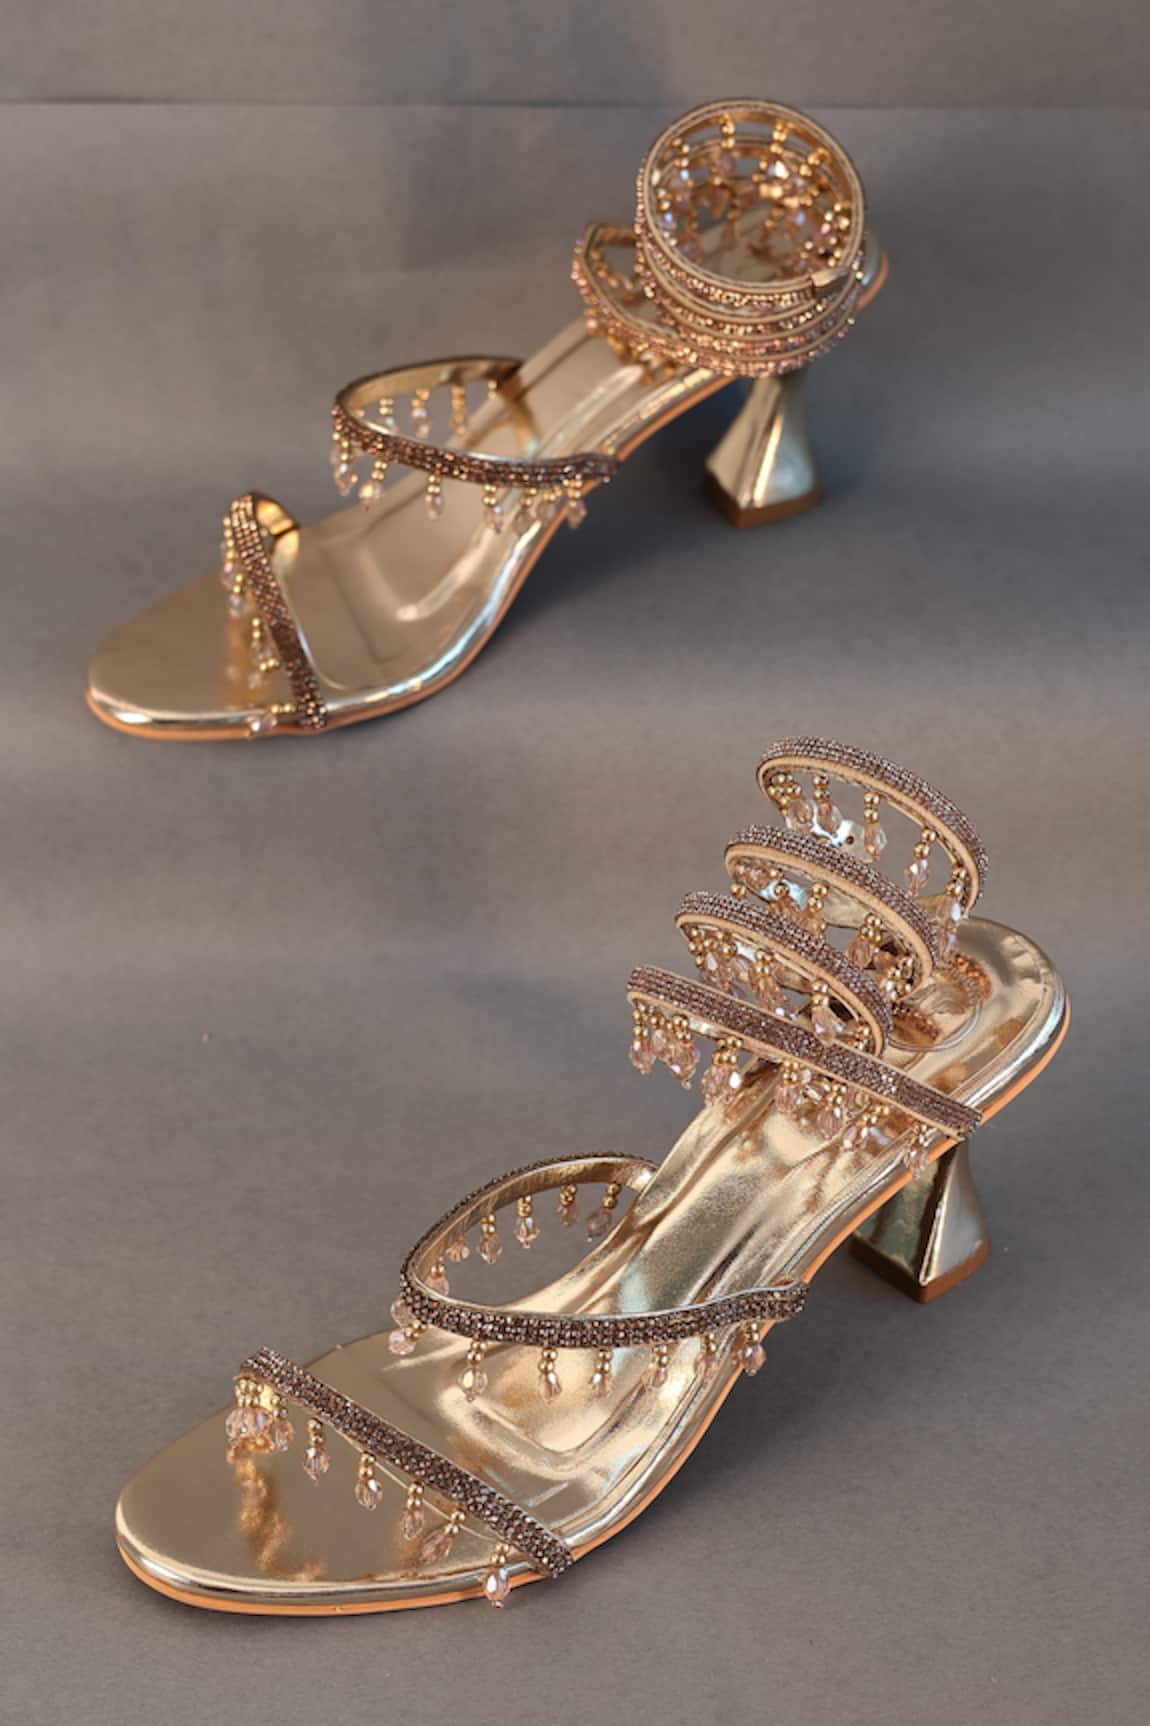 Sana K luxurious Footwear Stone Embellished Spring Heels